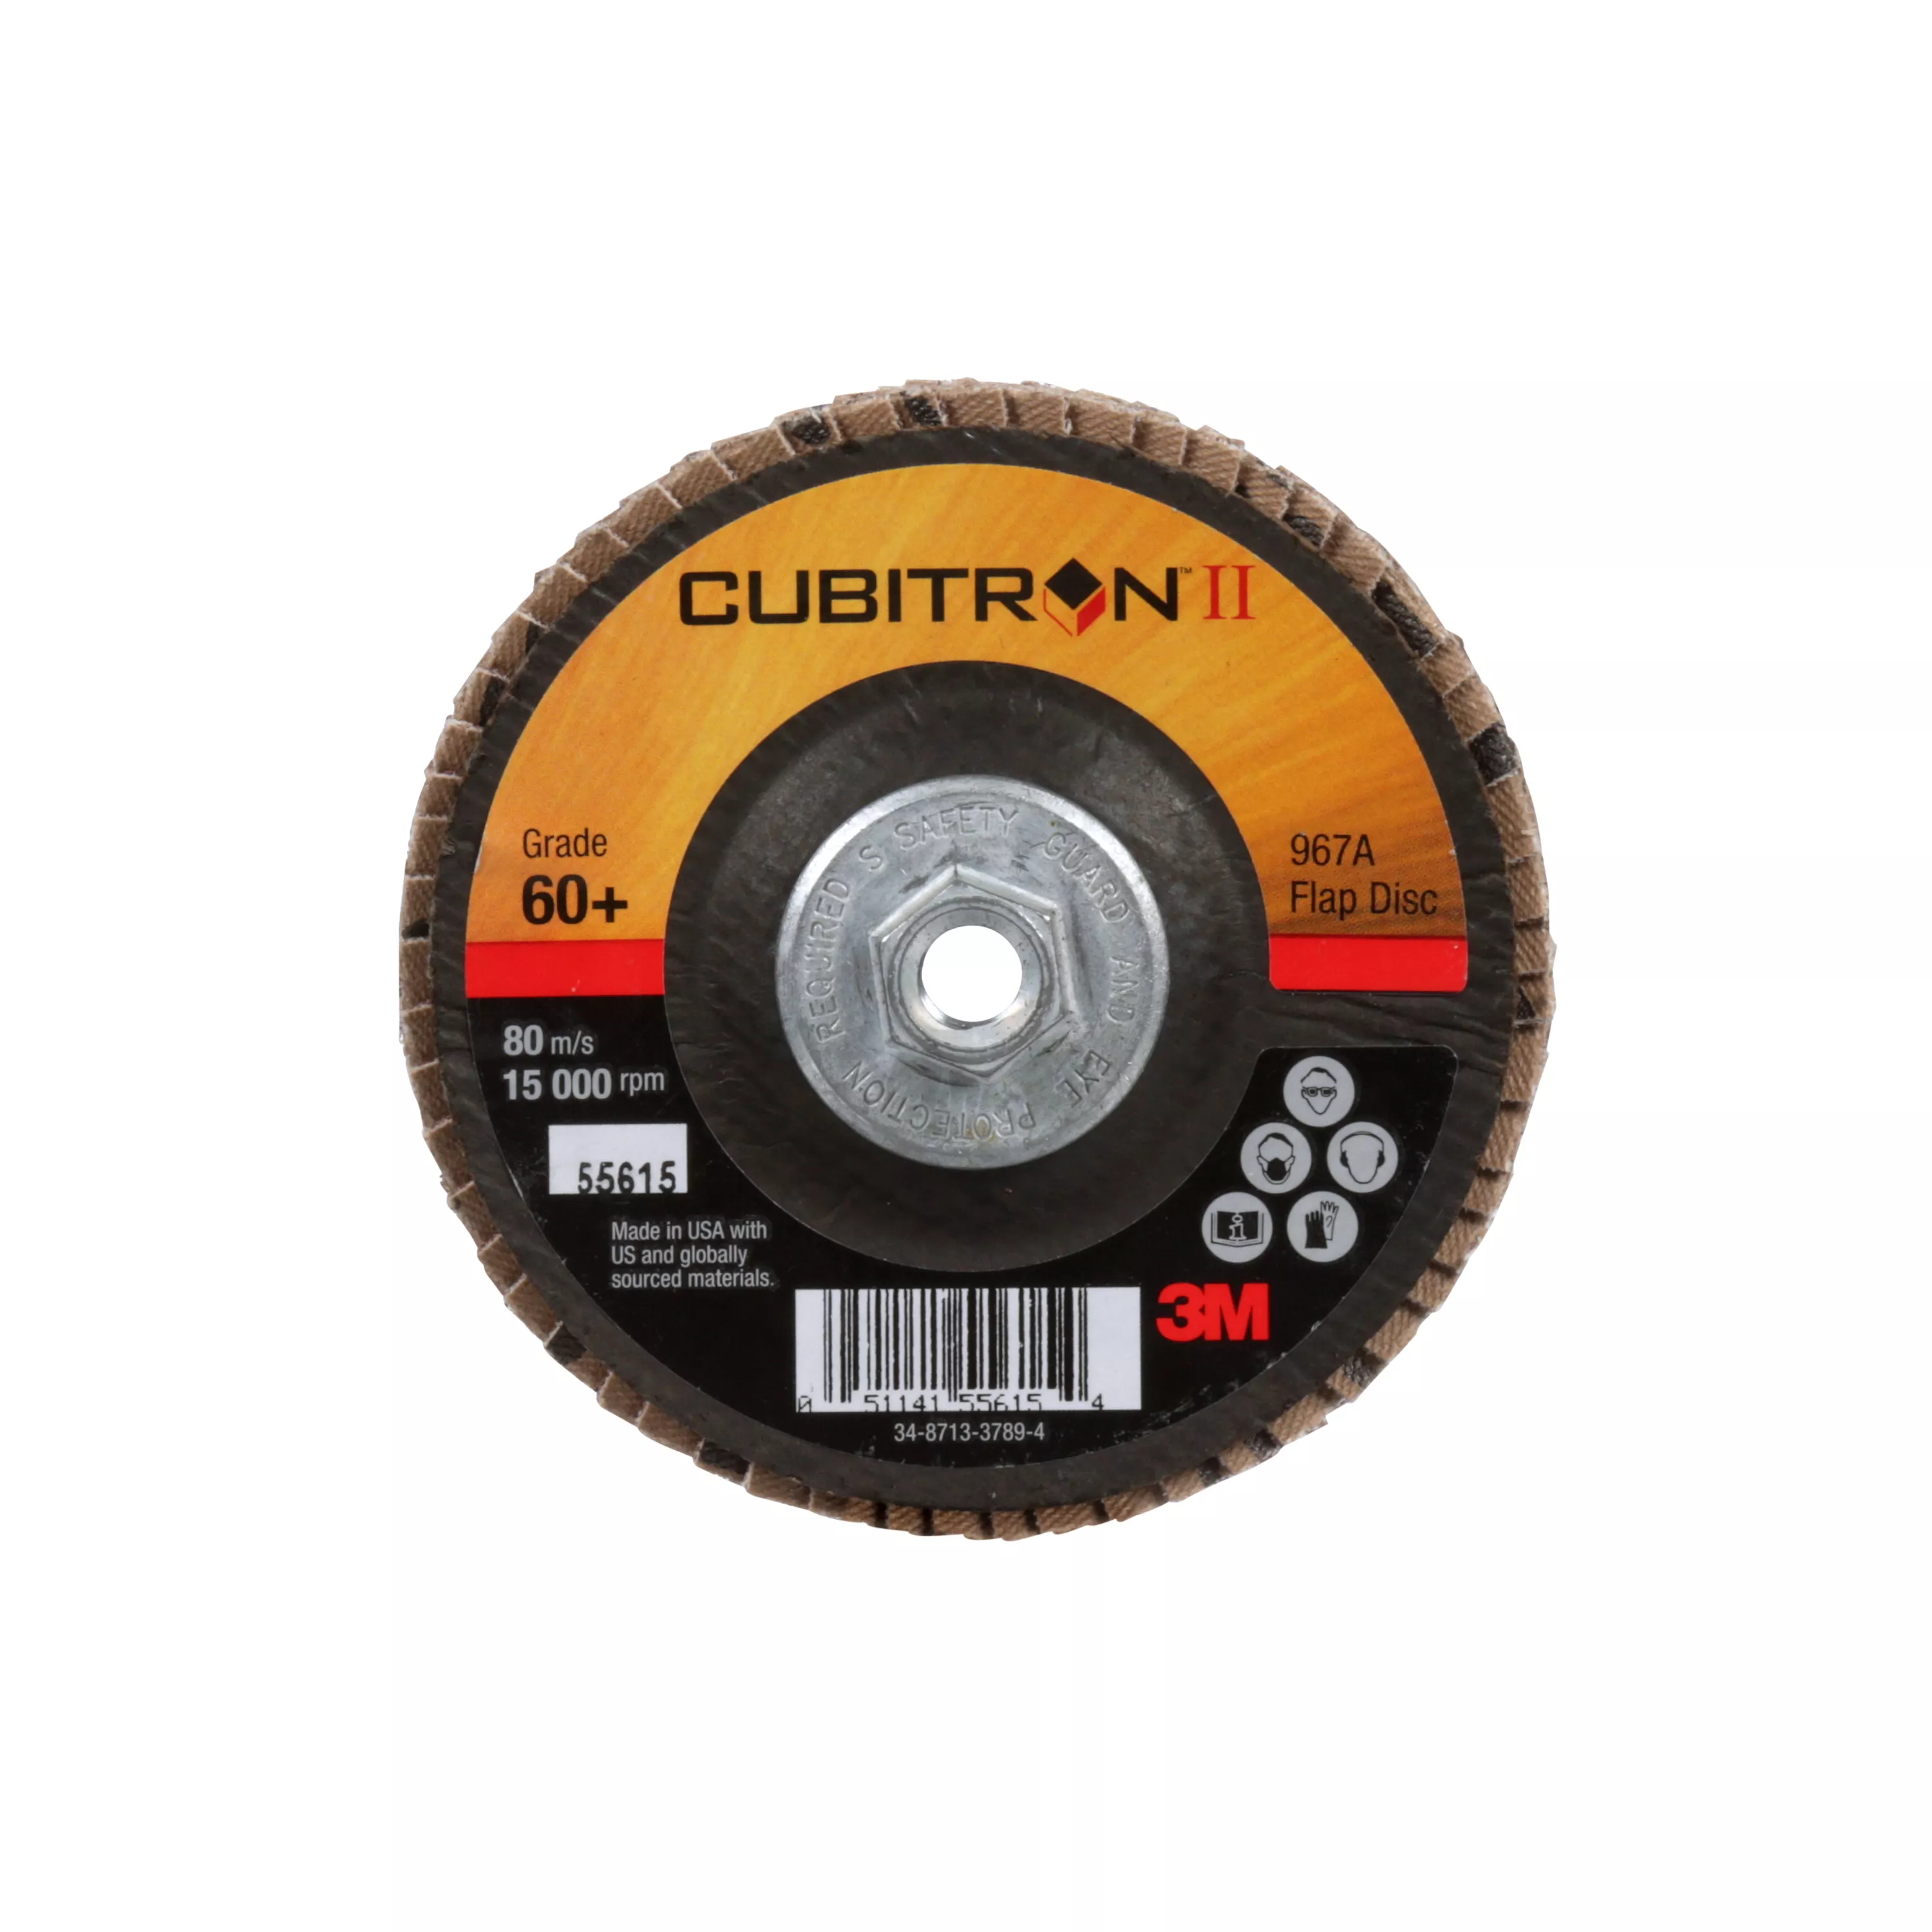 SKU 7010363293 | 3M™ Cubitron™ II Flap Disc 967A